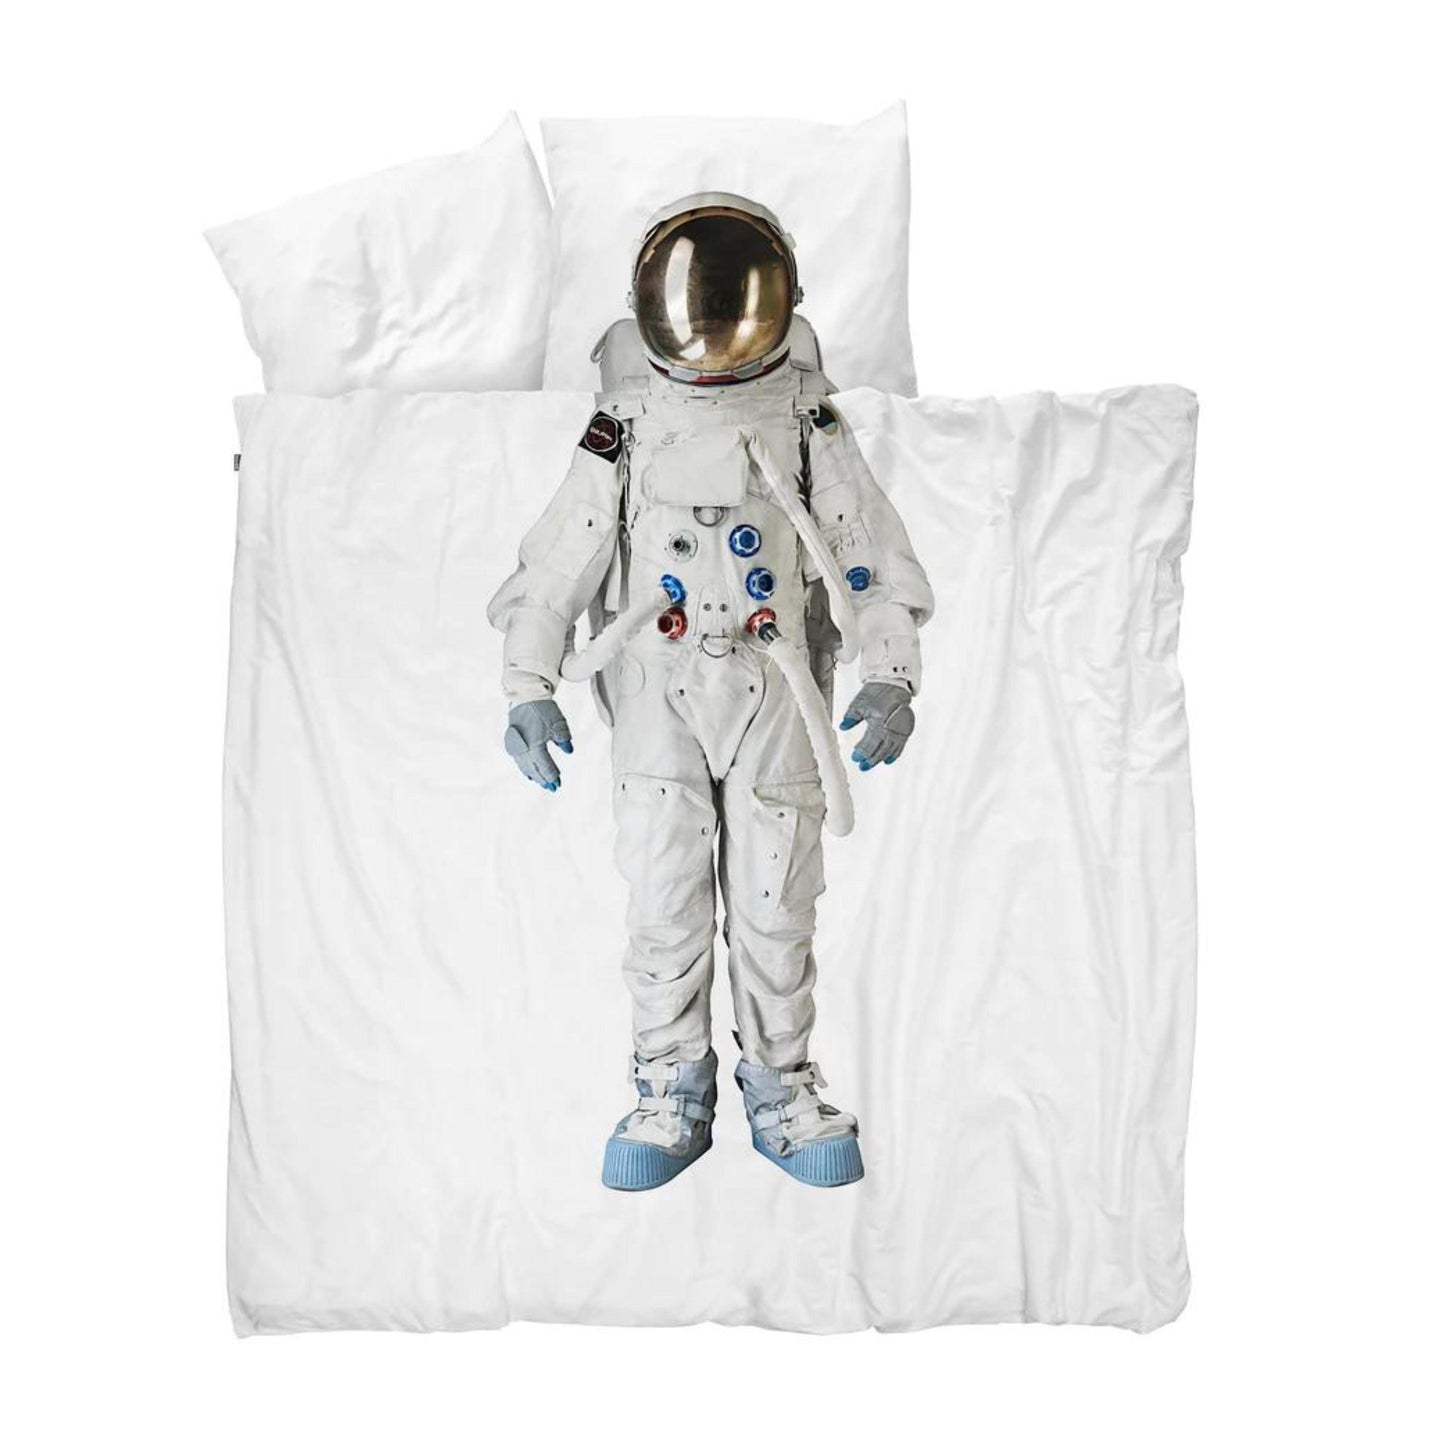 Astronaut dekbedovertrek - SNURK